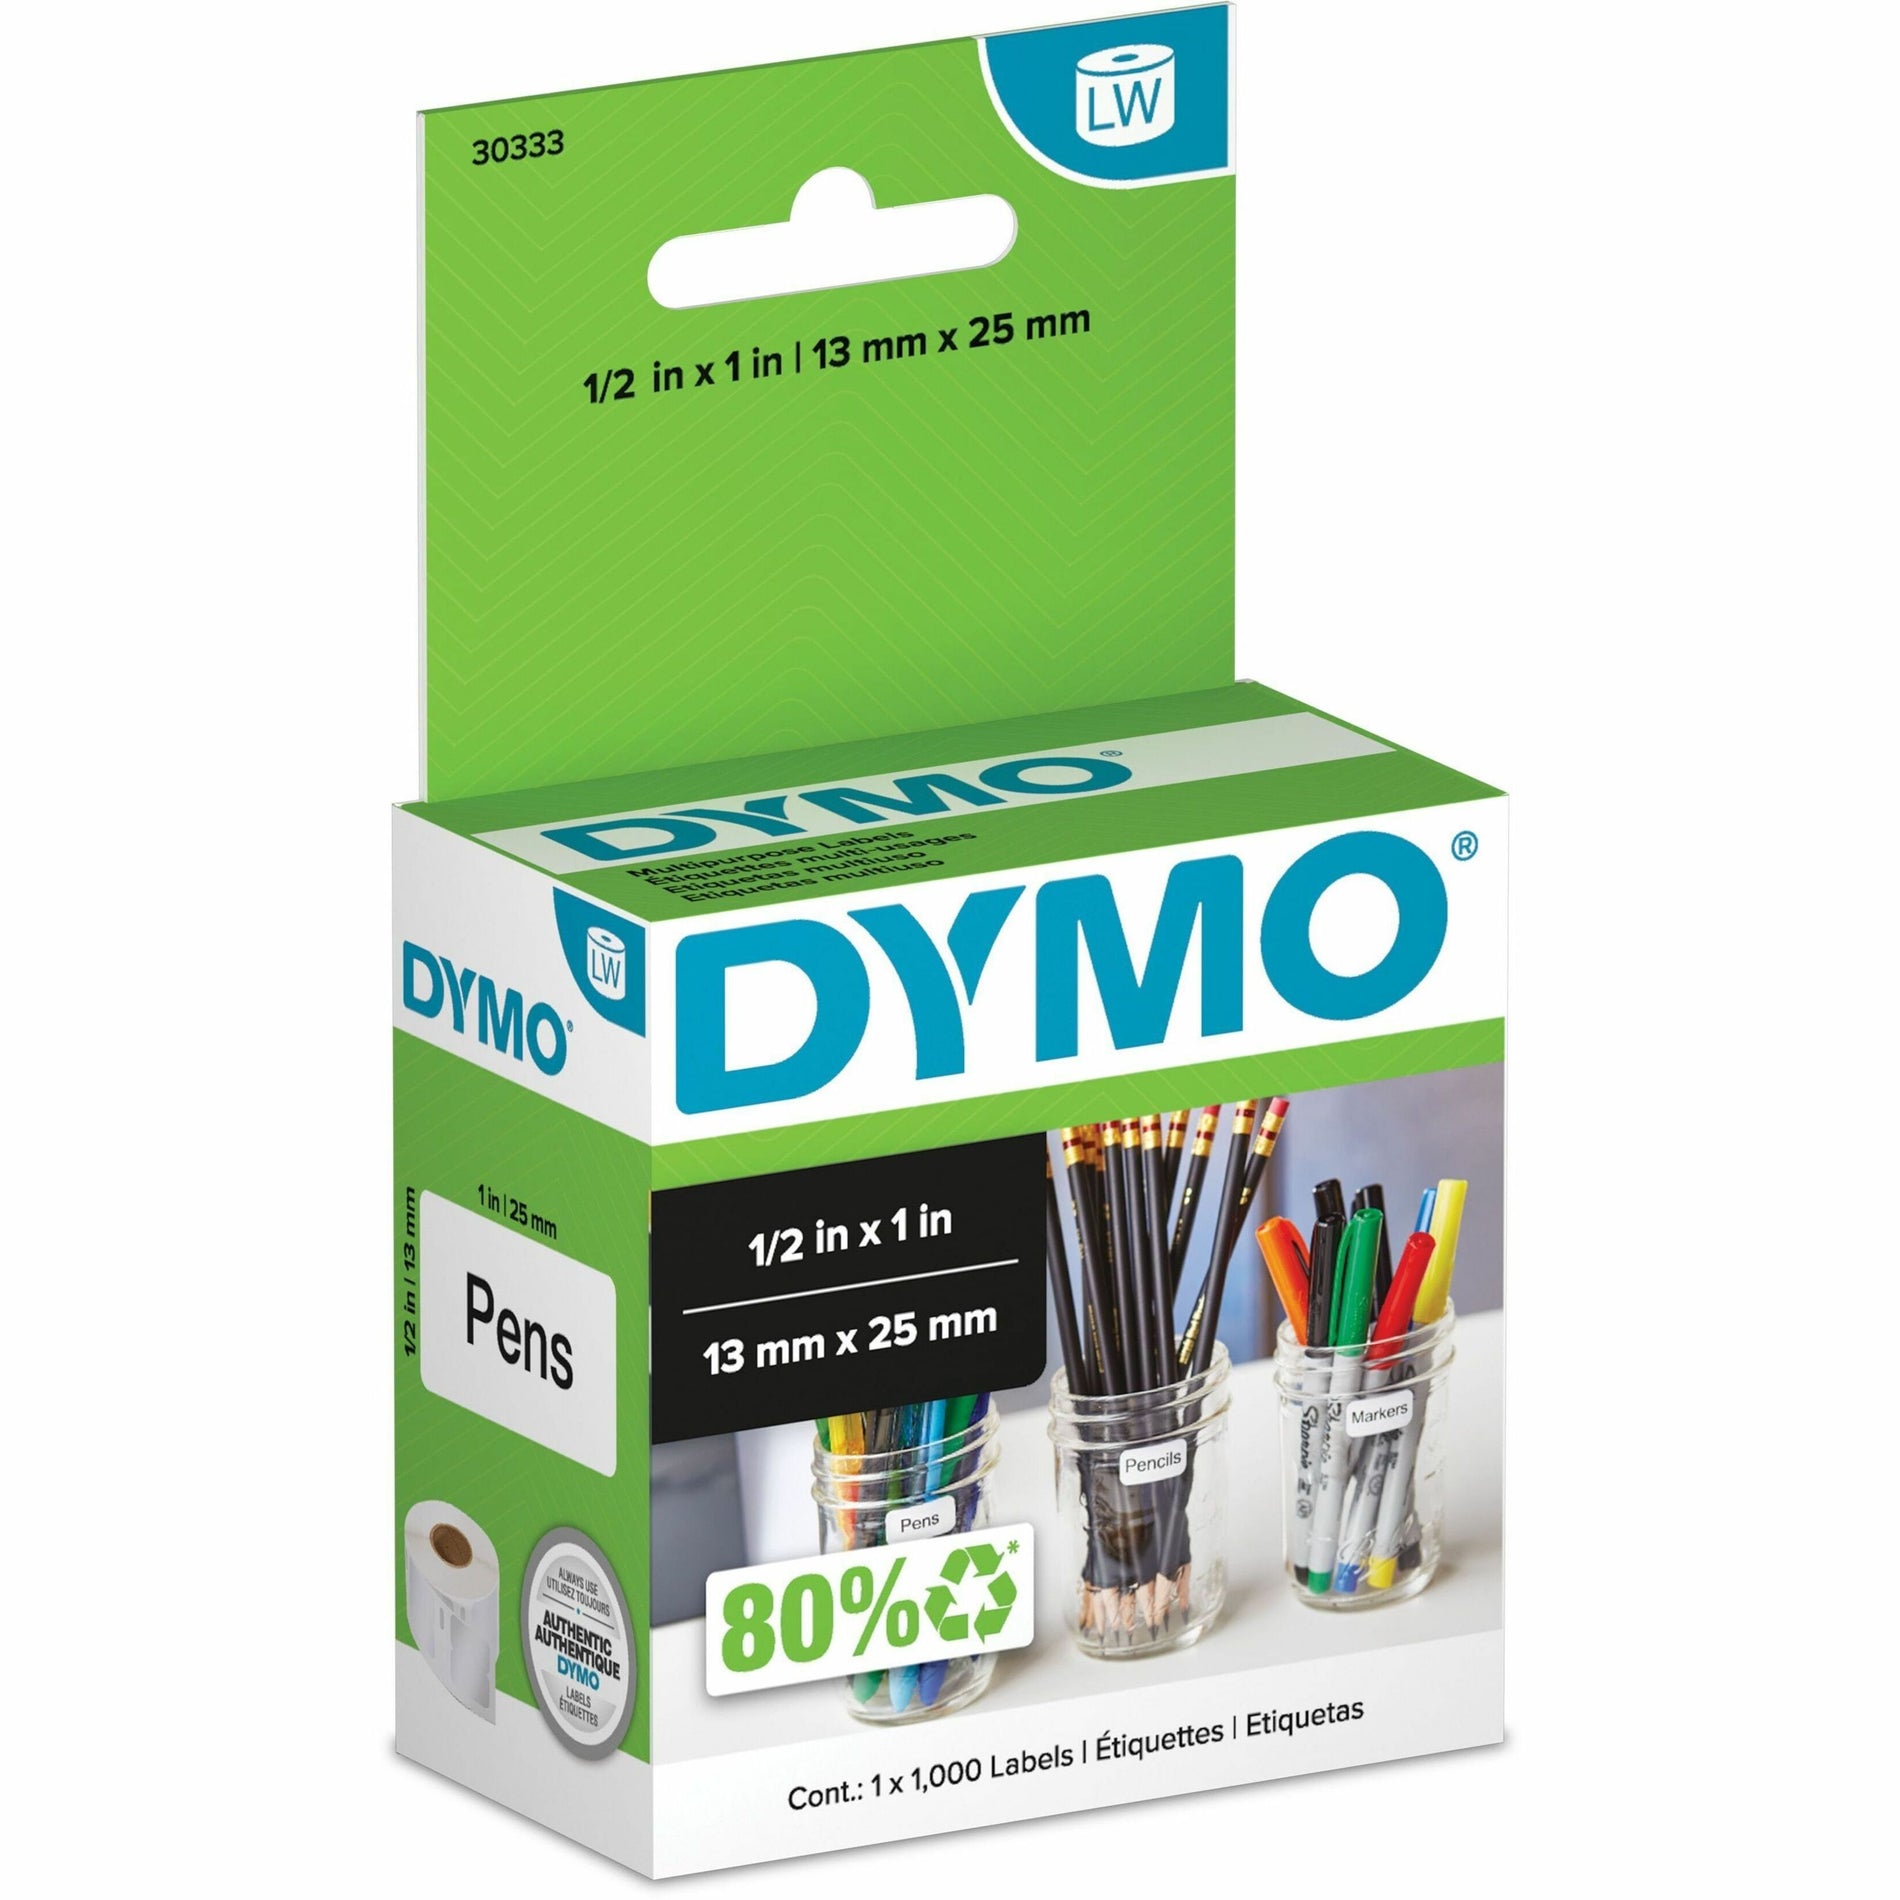 Dymo 30333 LW Multi-Purpose Labels 1/2" x 1", Black on White, 1000 Labels per Roll